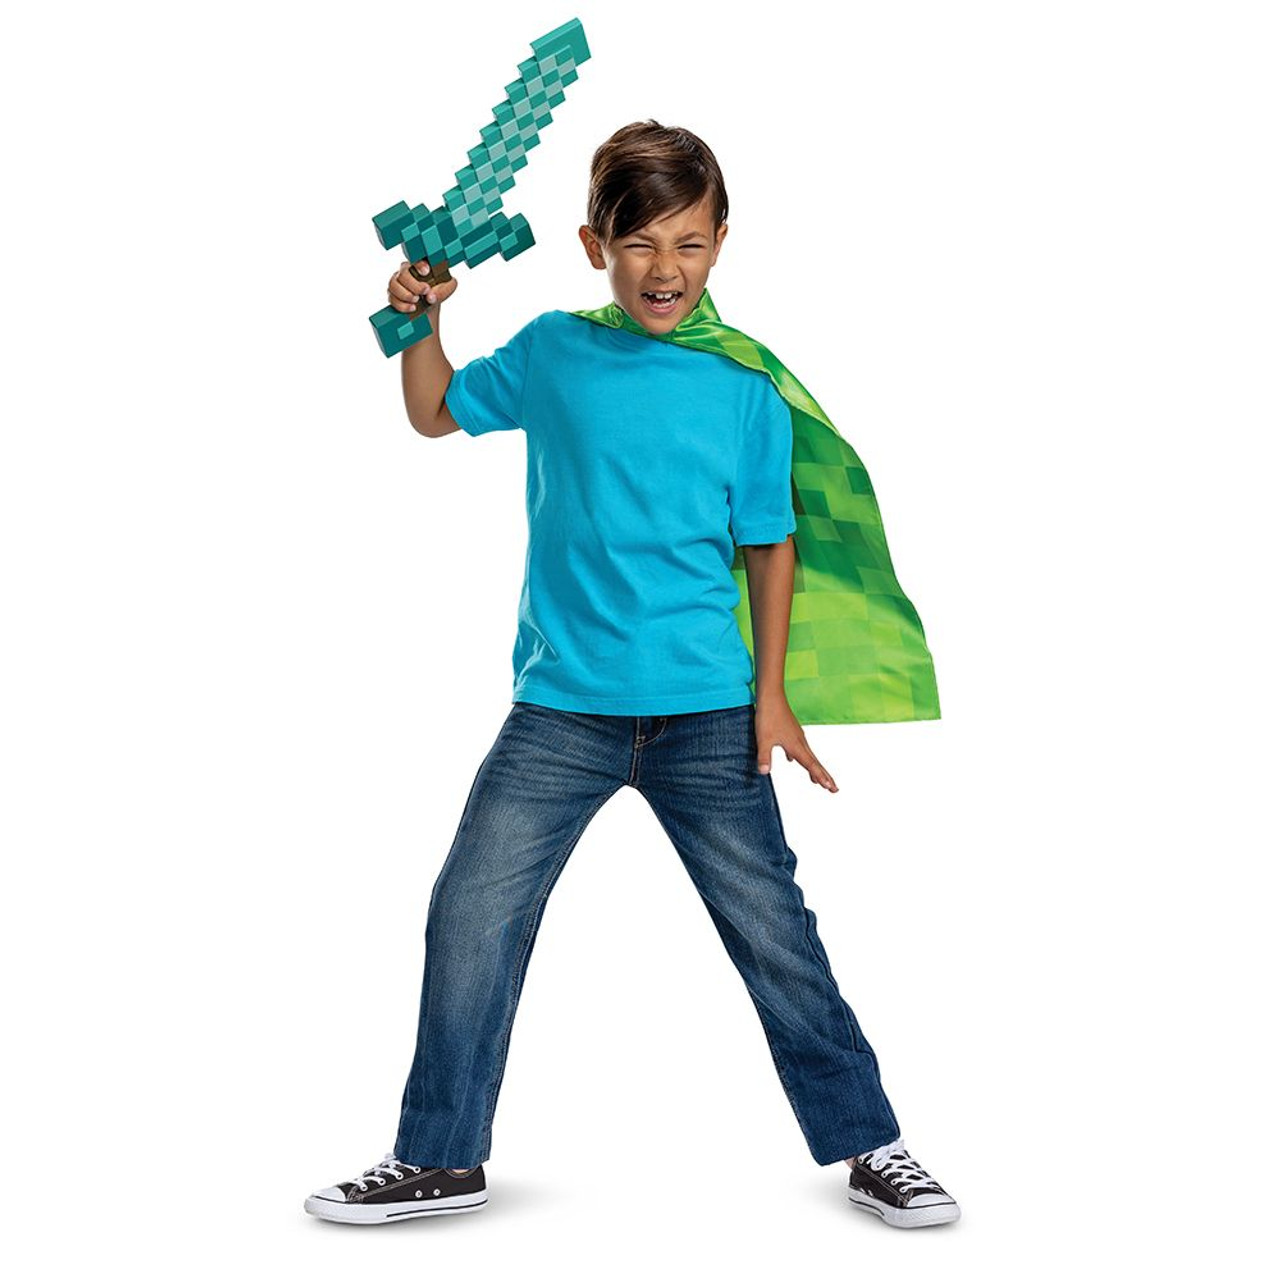 Kids Ninja Weapons Accessory Set